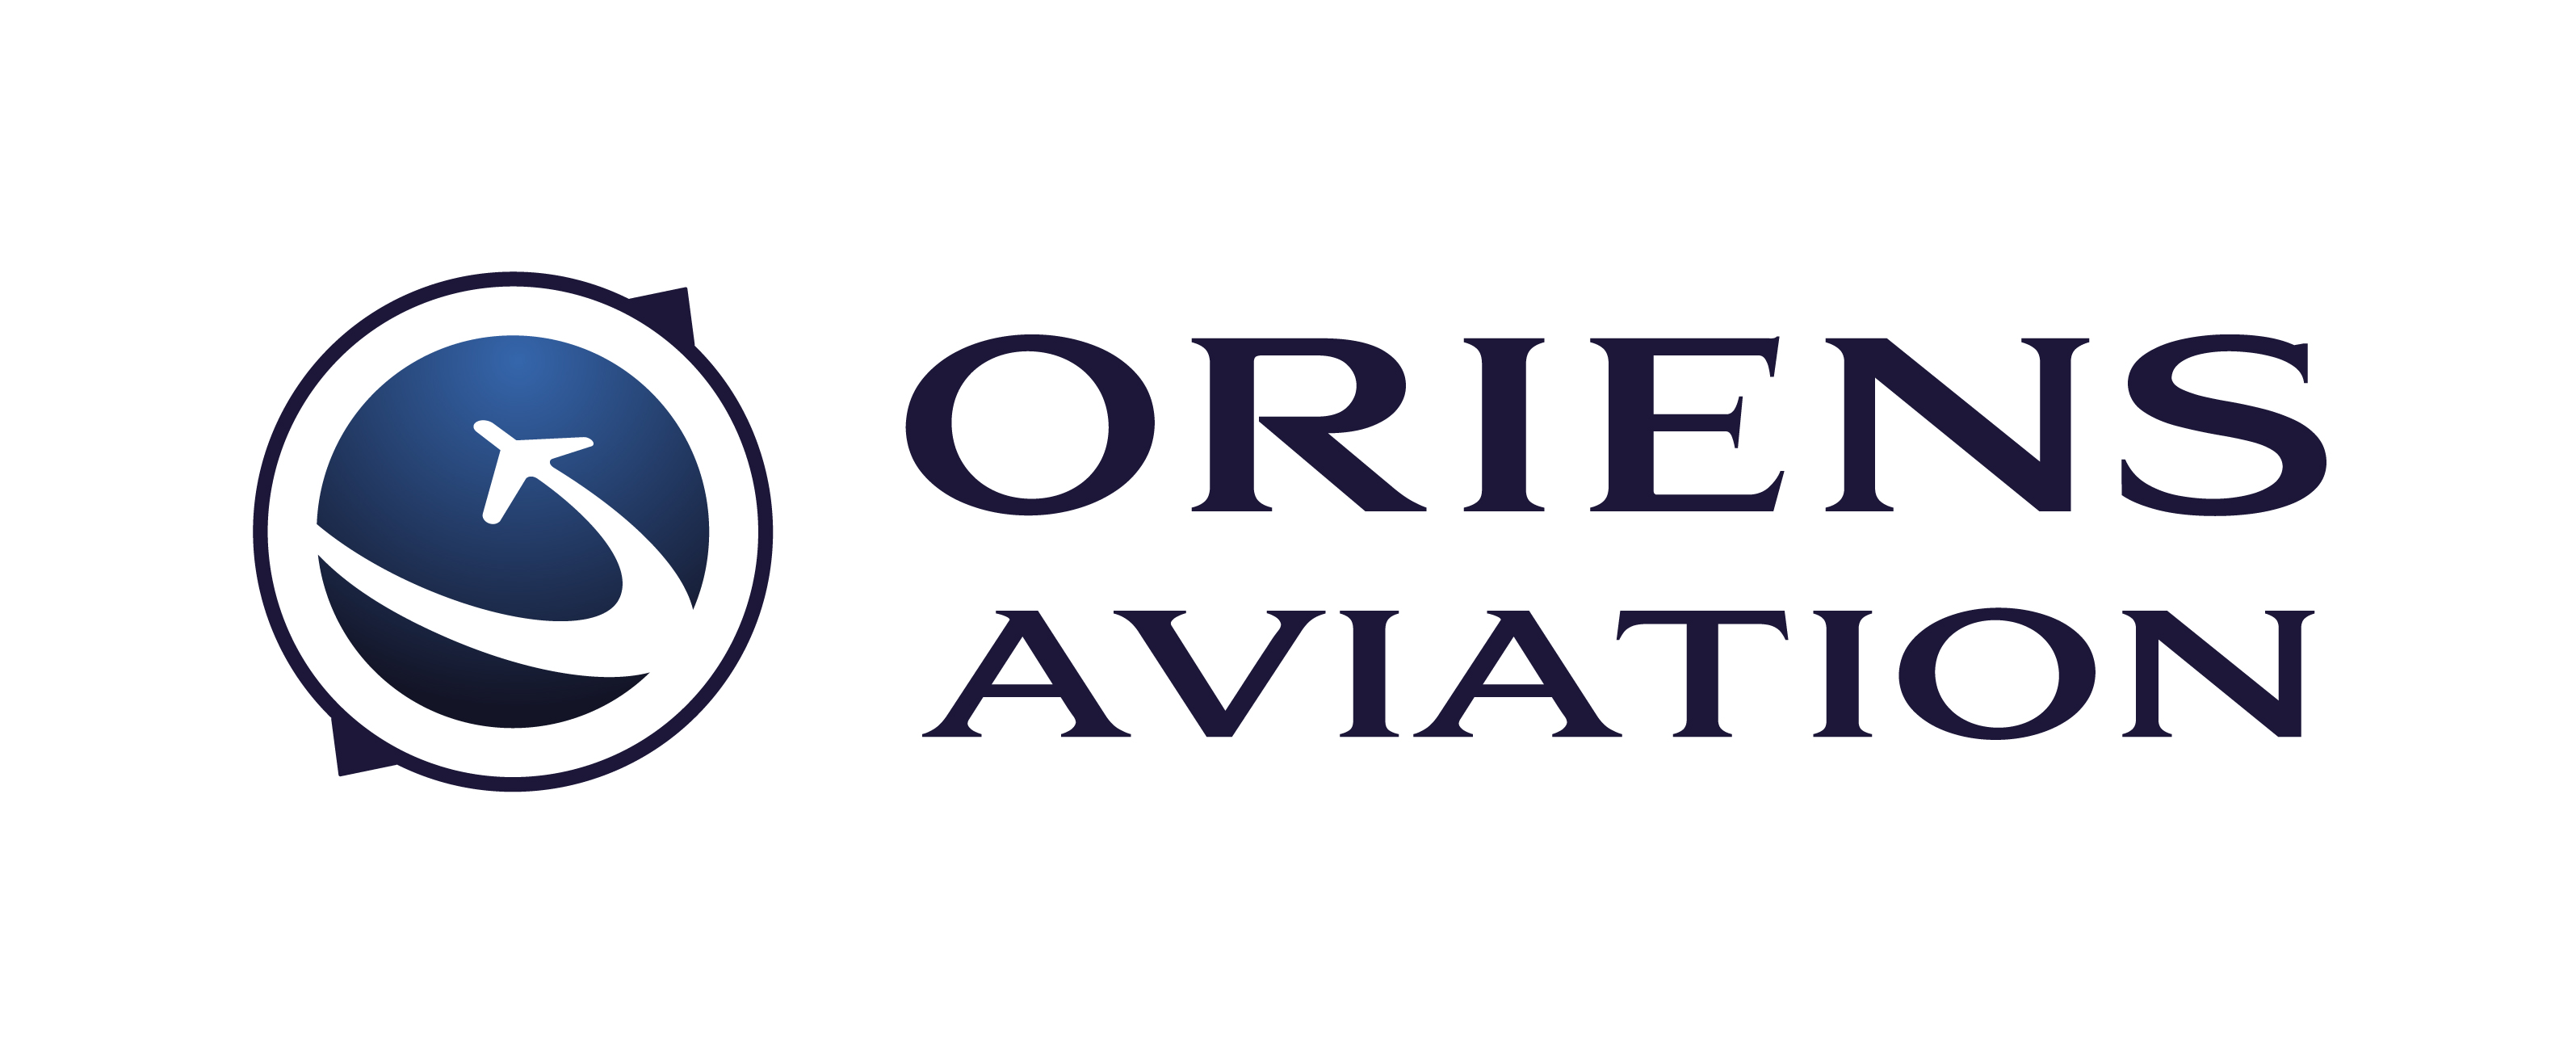 Oriens Aviation logo